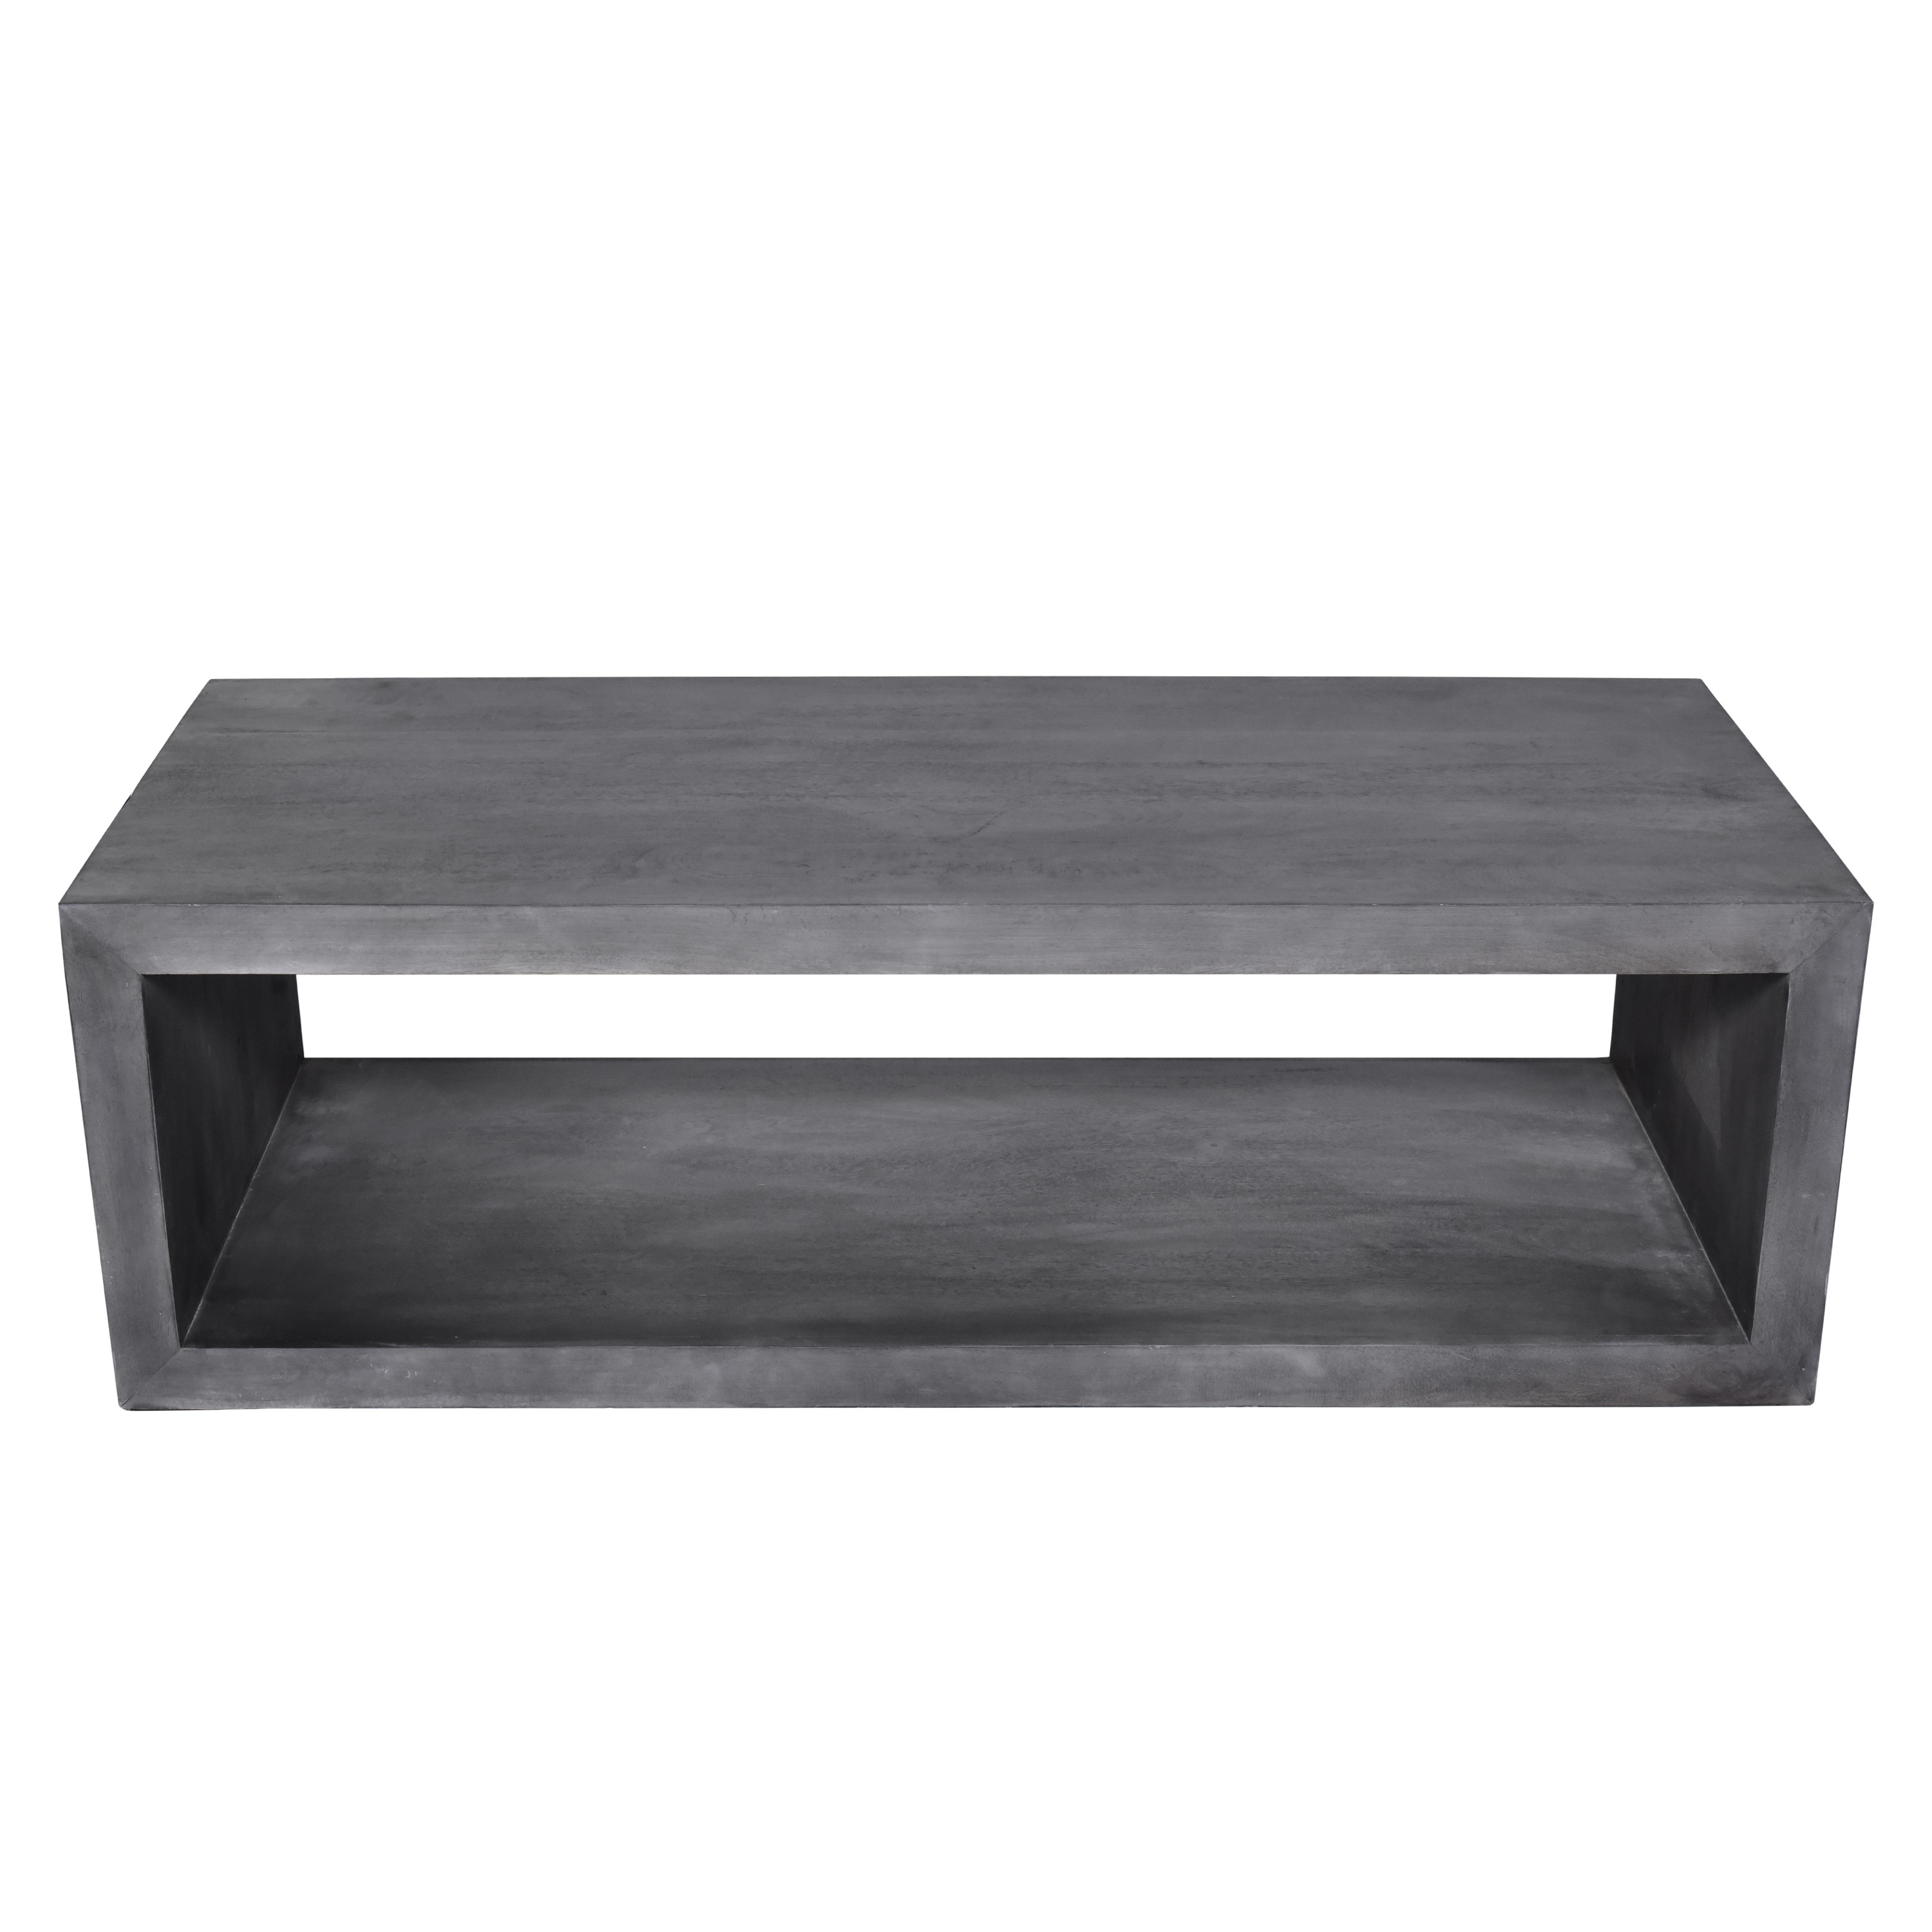 58 Cube Shape Wooden Coffee Table With Open Bottom Shelf, Charcoal Gray- Saltoro Sherpi